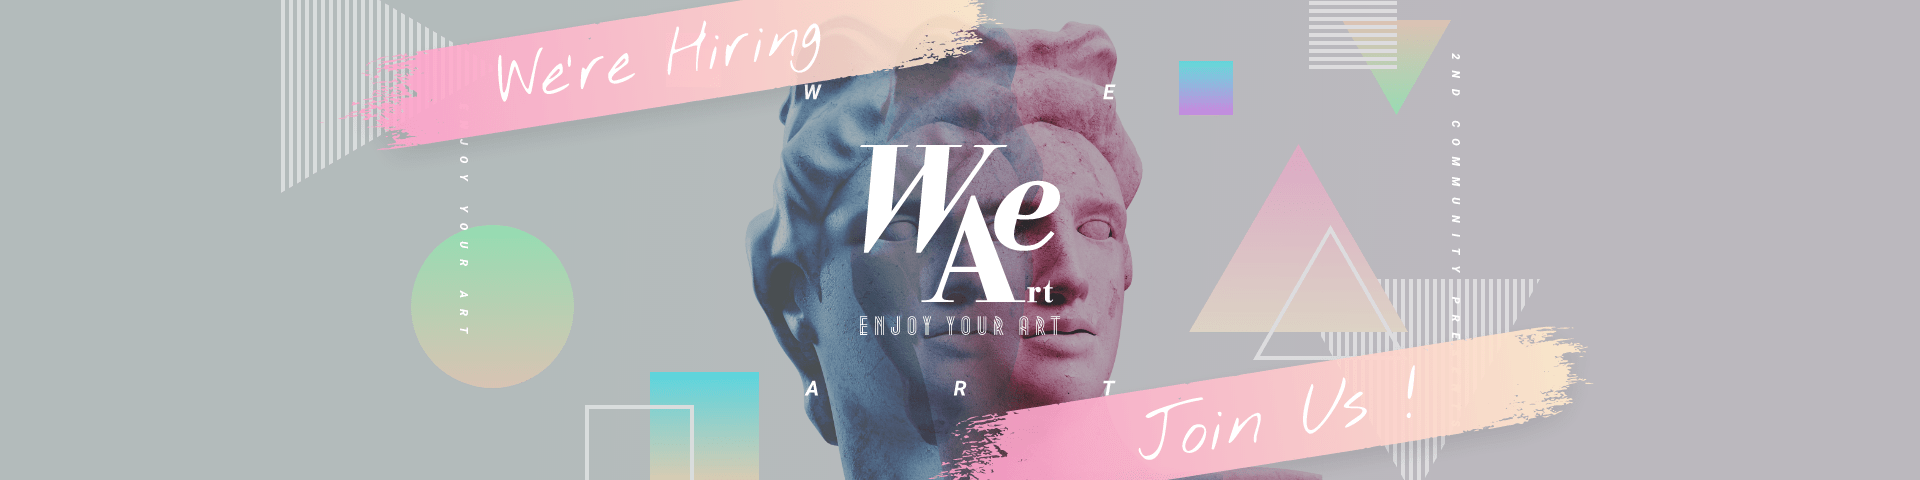 We're Hiring WeArt ENJOY YOUR ART Join Us!